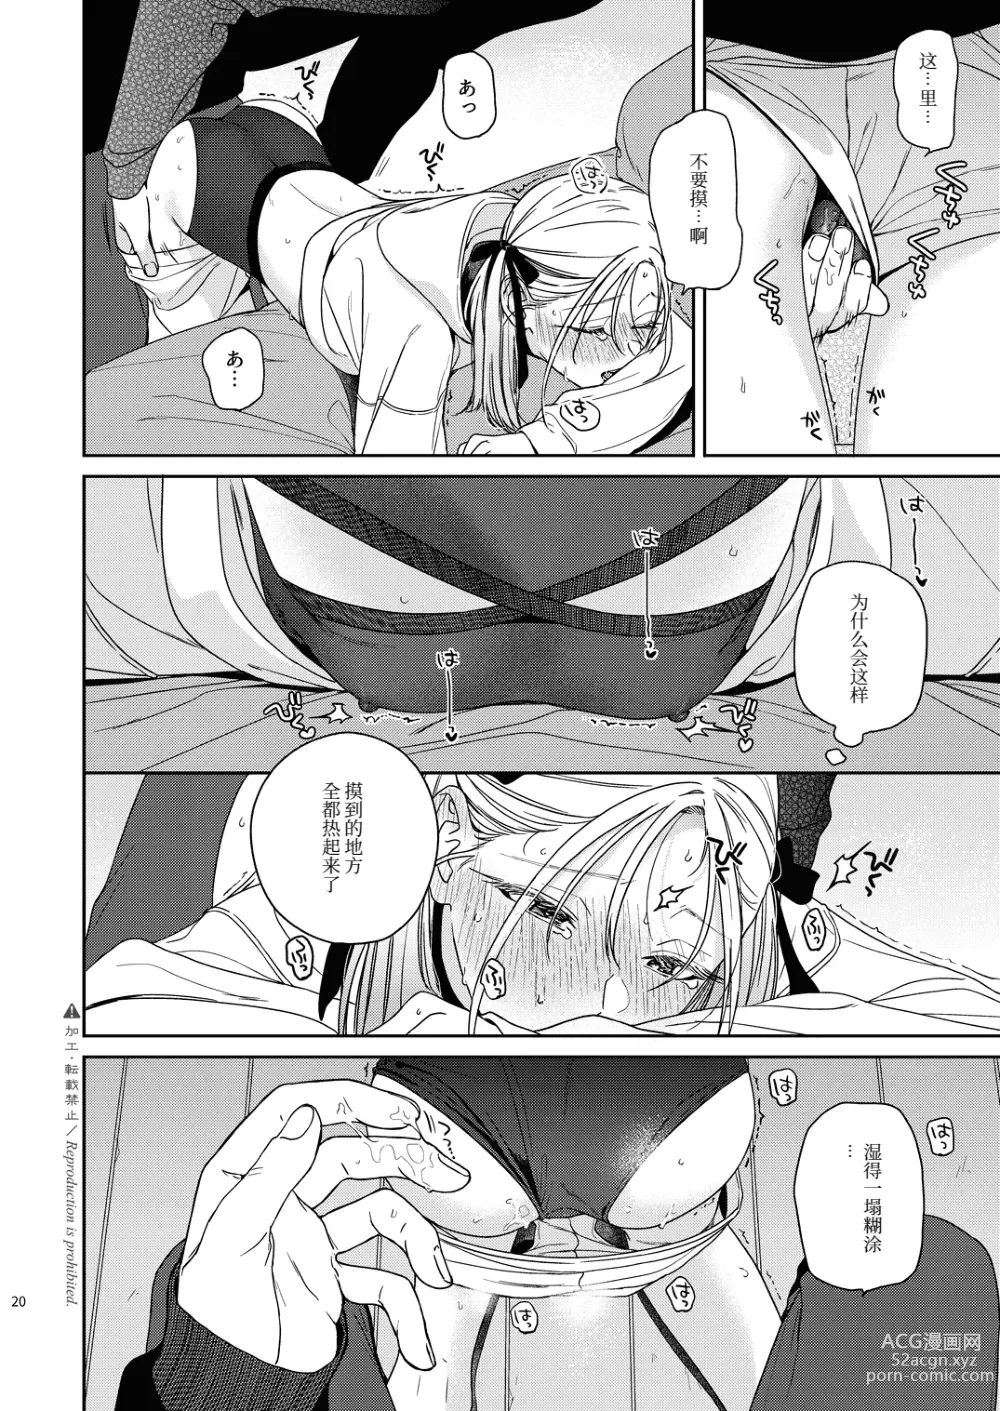 Page 22 of doujinshi Katami to Getsumei